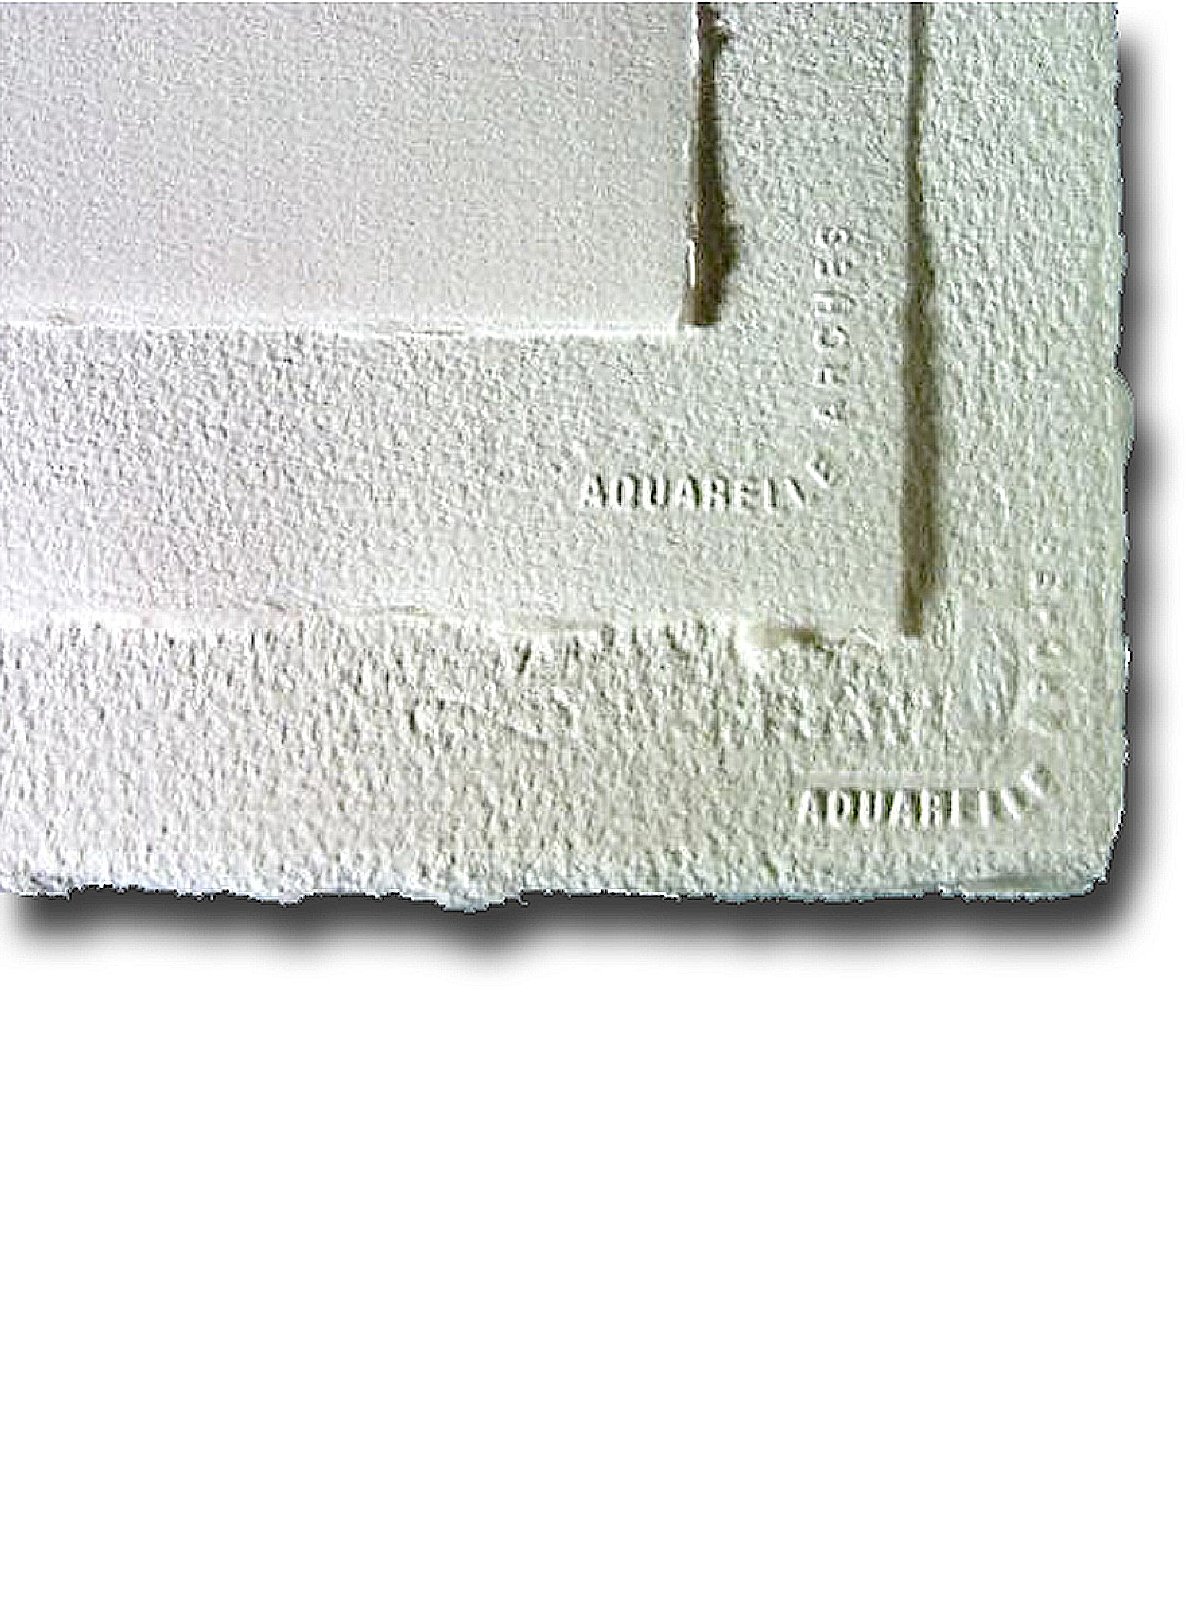 Arches Watercolor Paper Sheet Bright White 140lb Rough 22x30